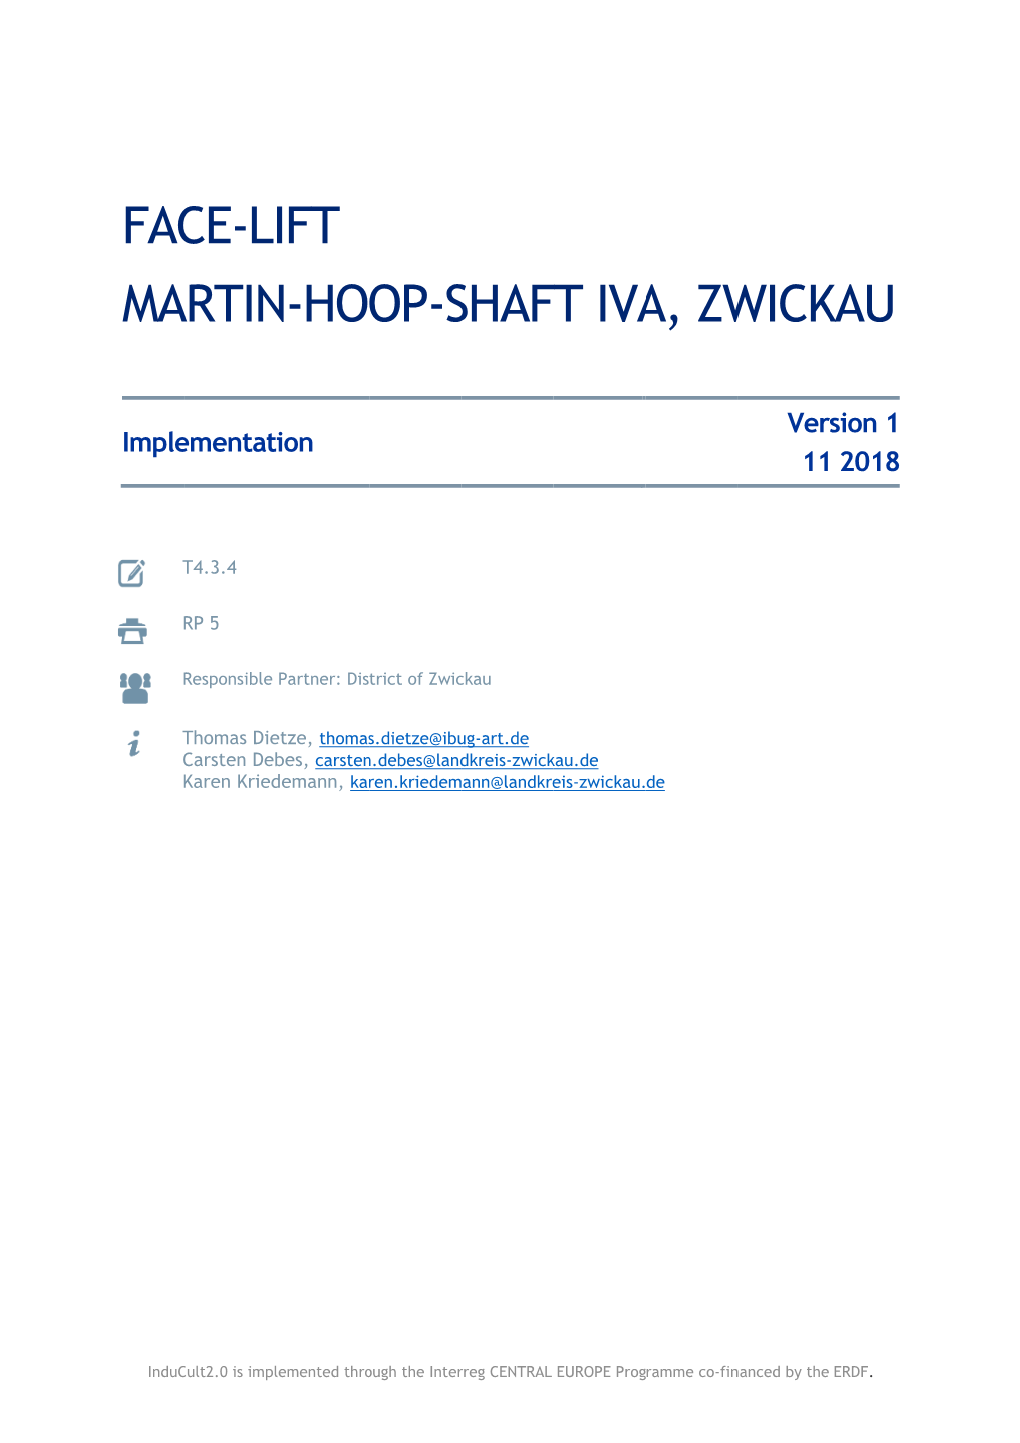 Lift Martin-Hoop-Shaft Iva, Zwickau